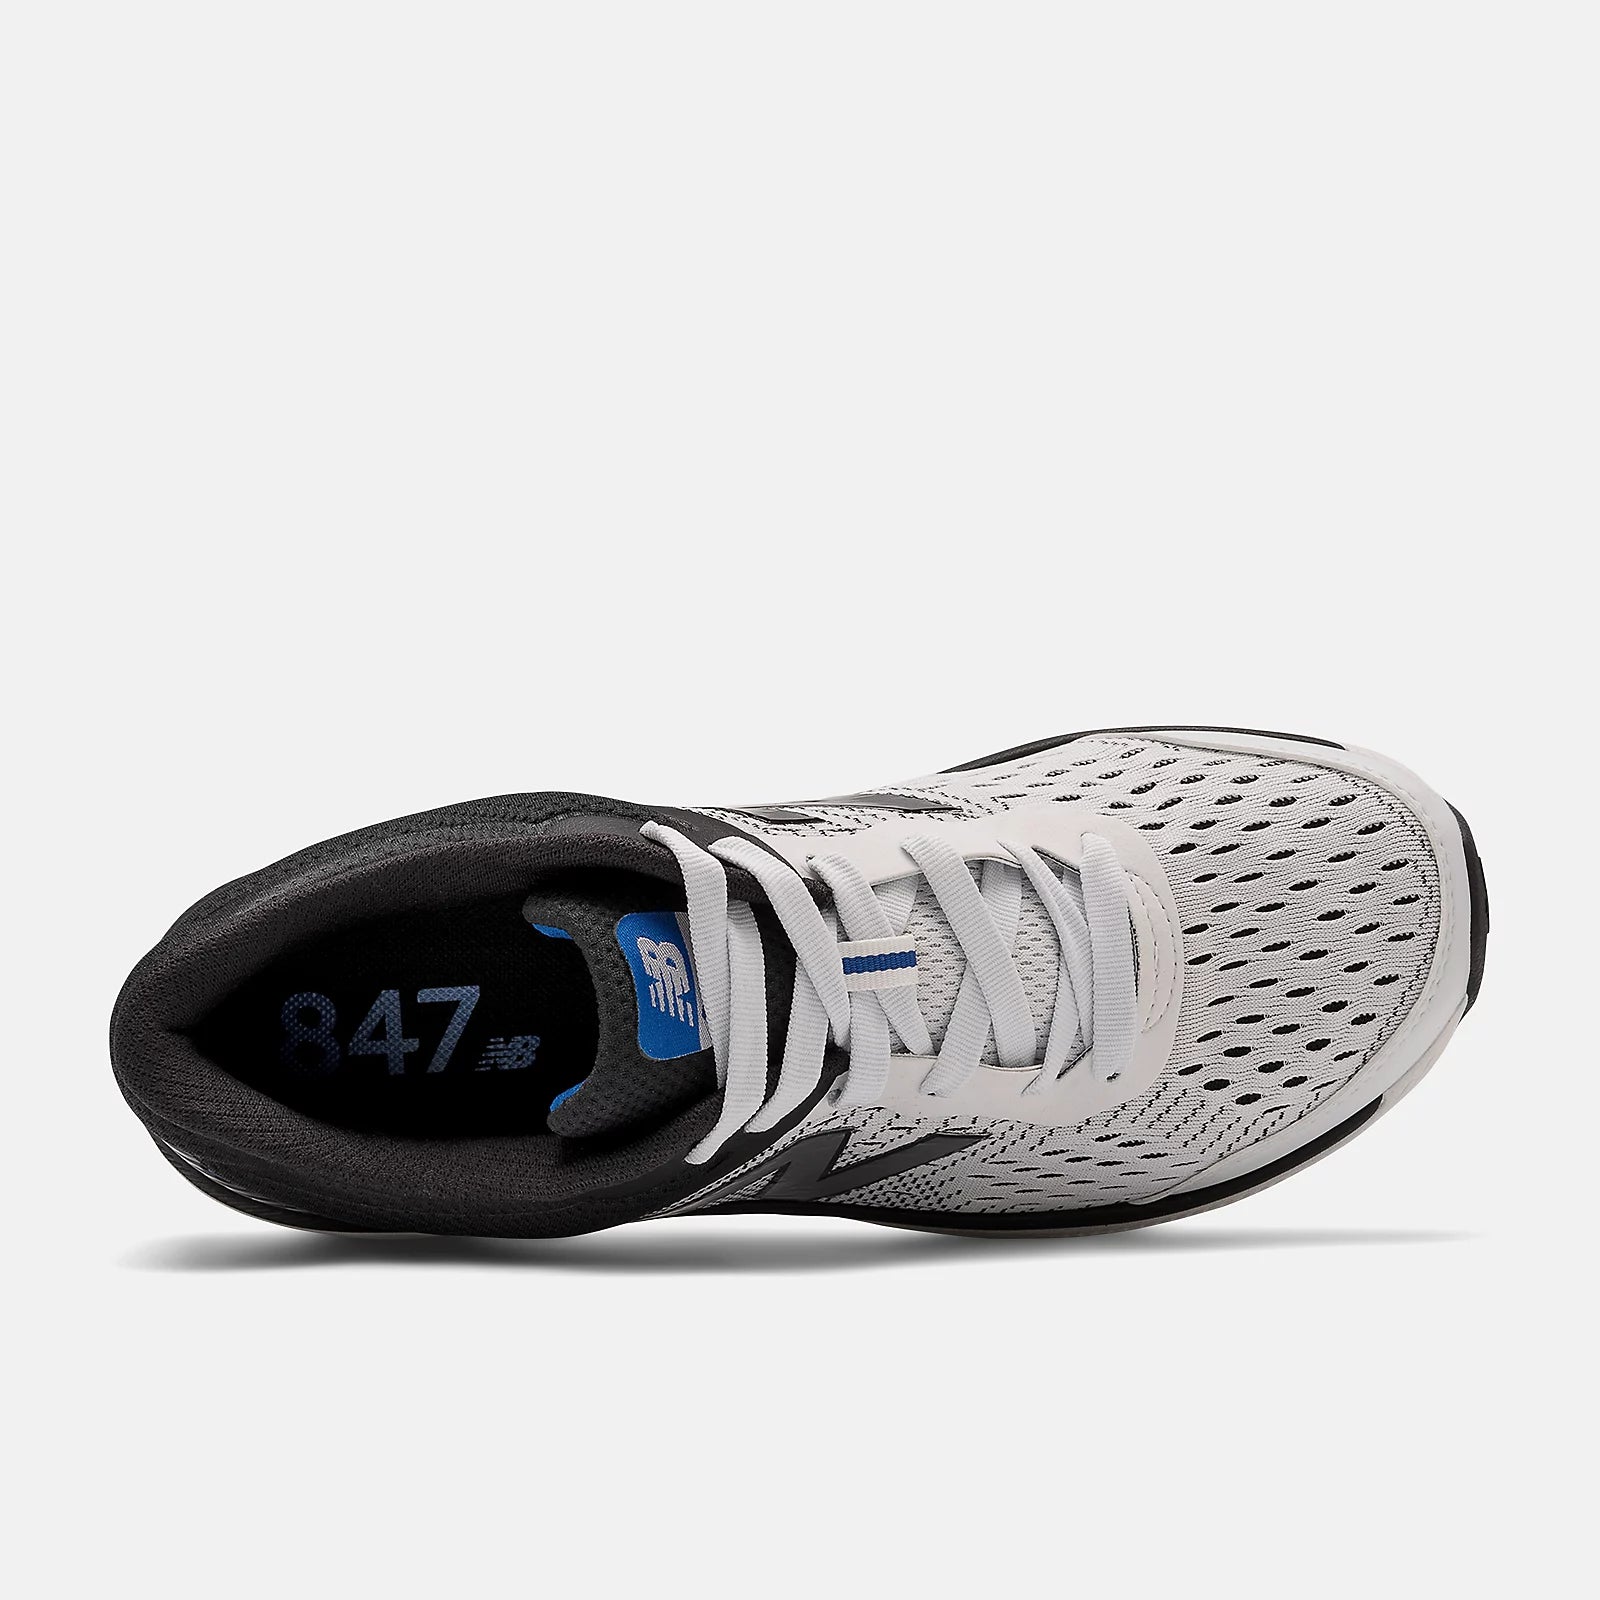 New Balance Men's 847v4 Sneakers Grey